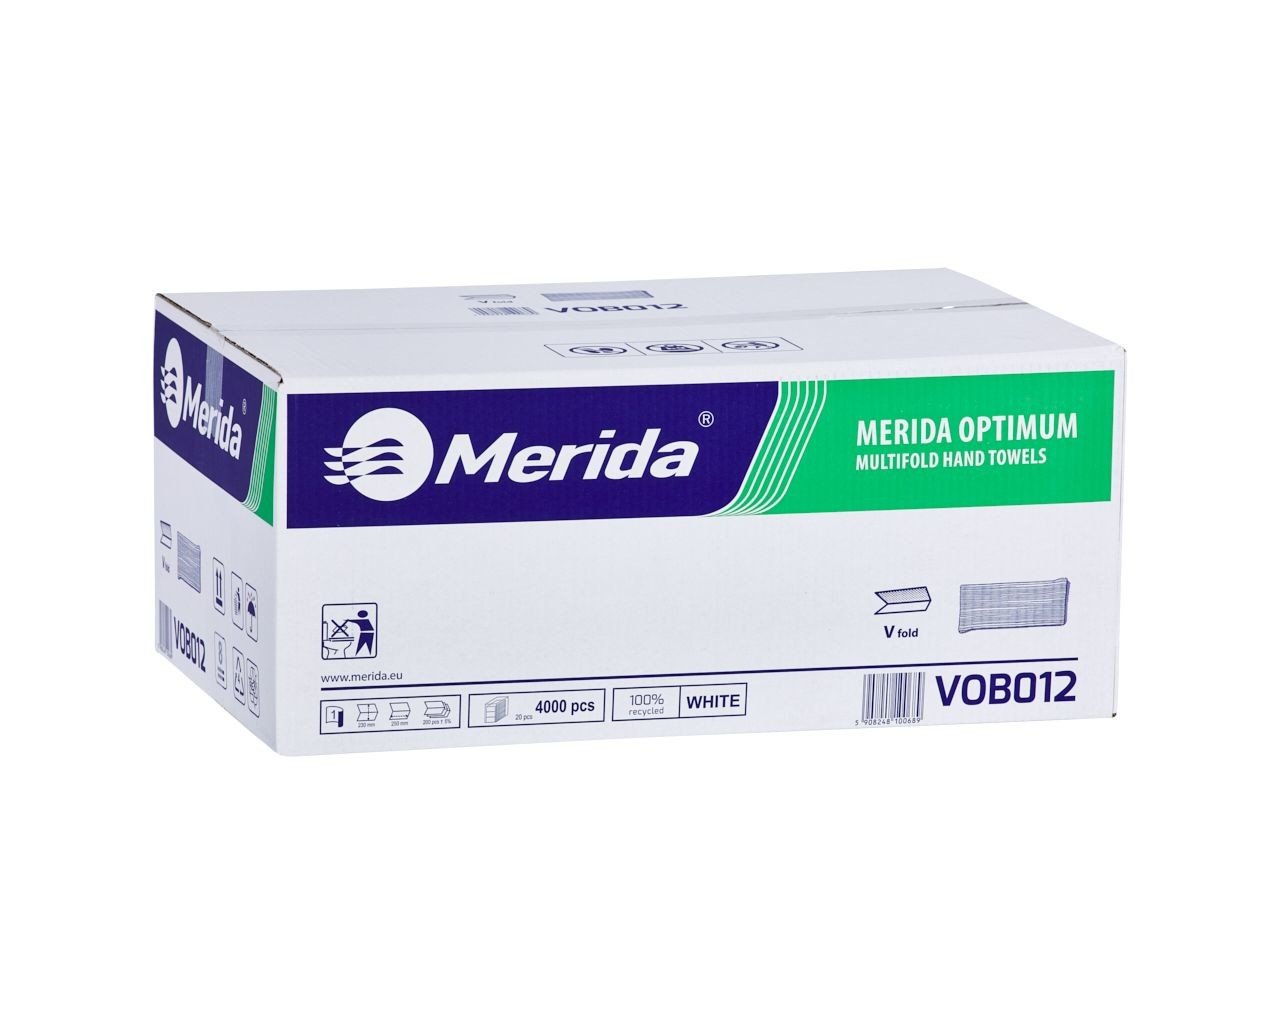 Merida Optimum Papírové Ručníky Bílé 4000 Ks